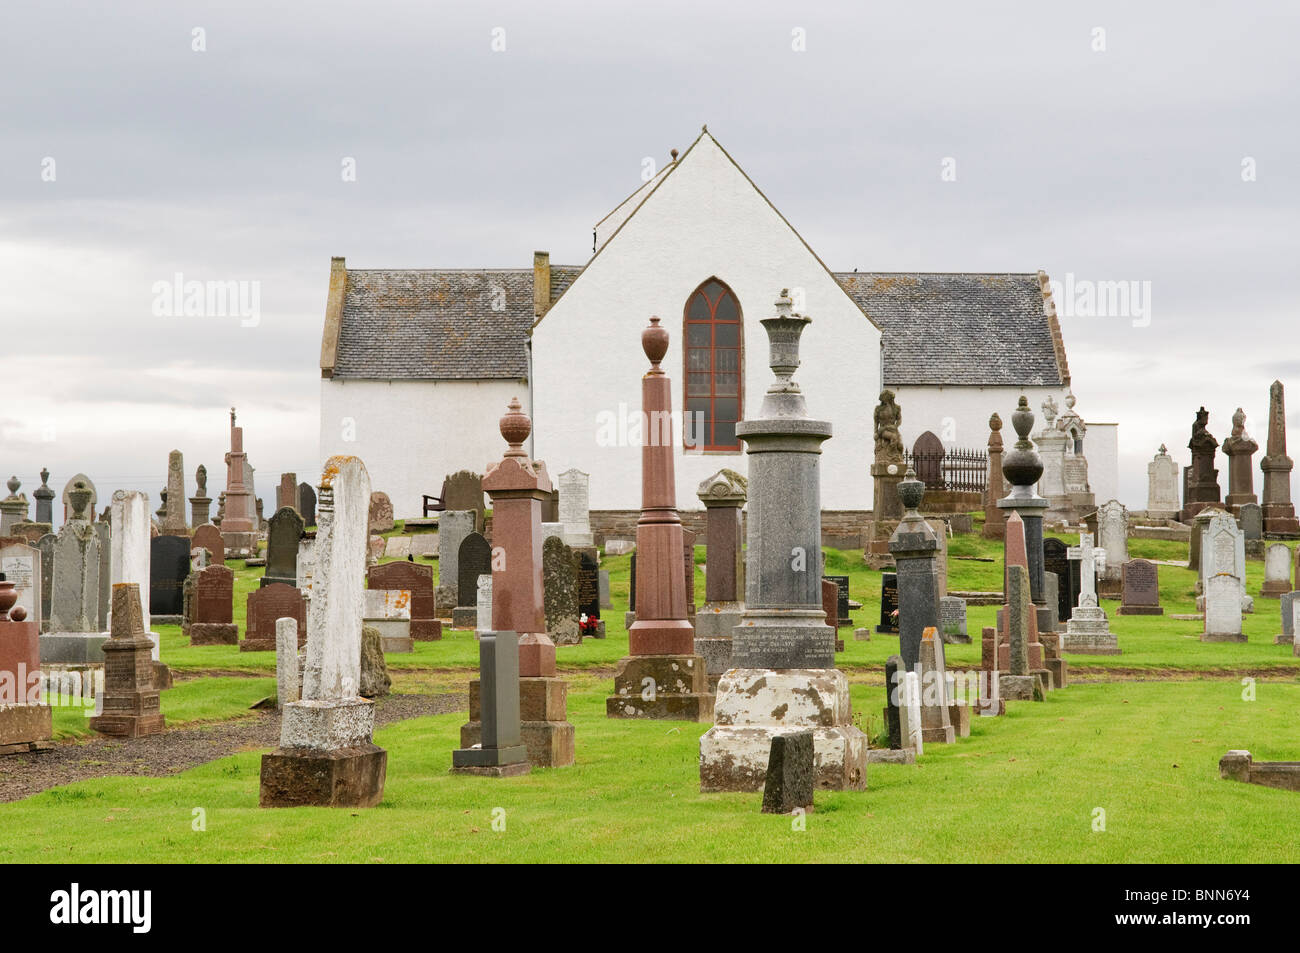 Canisbay kirk (church) and headstones, Caithness, Scotland. Stock Photo